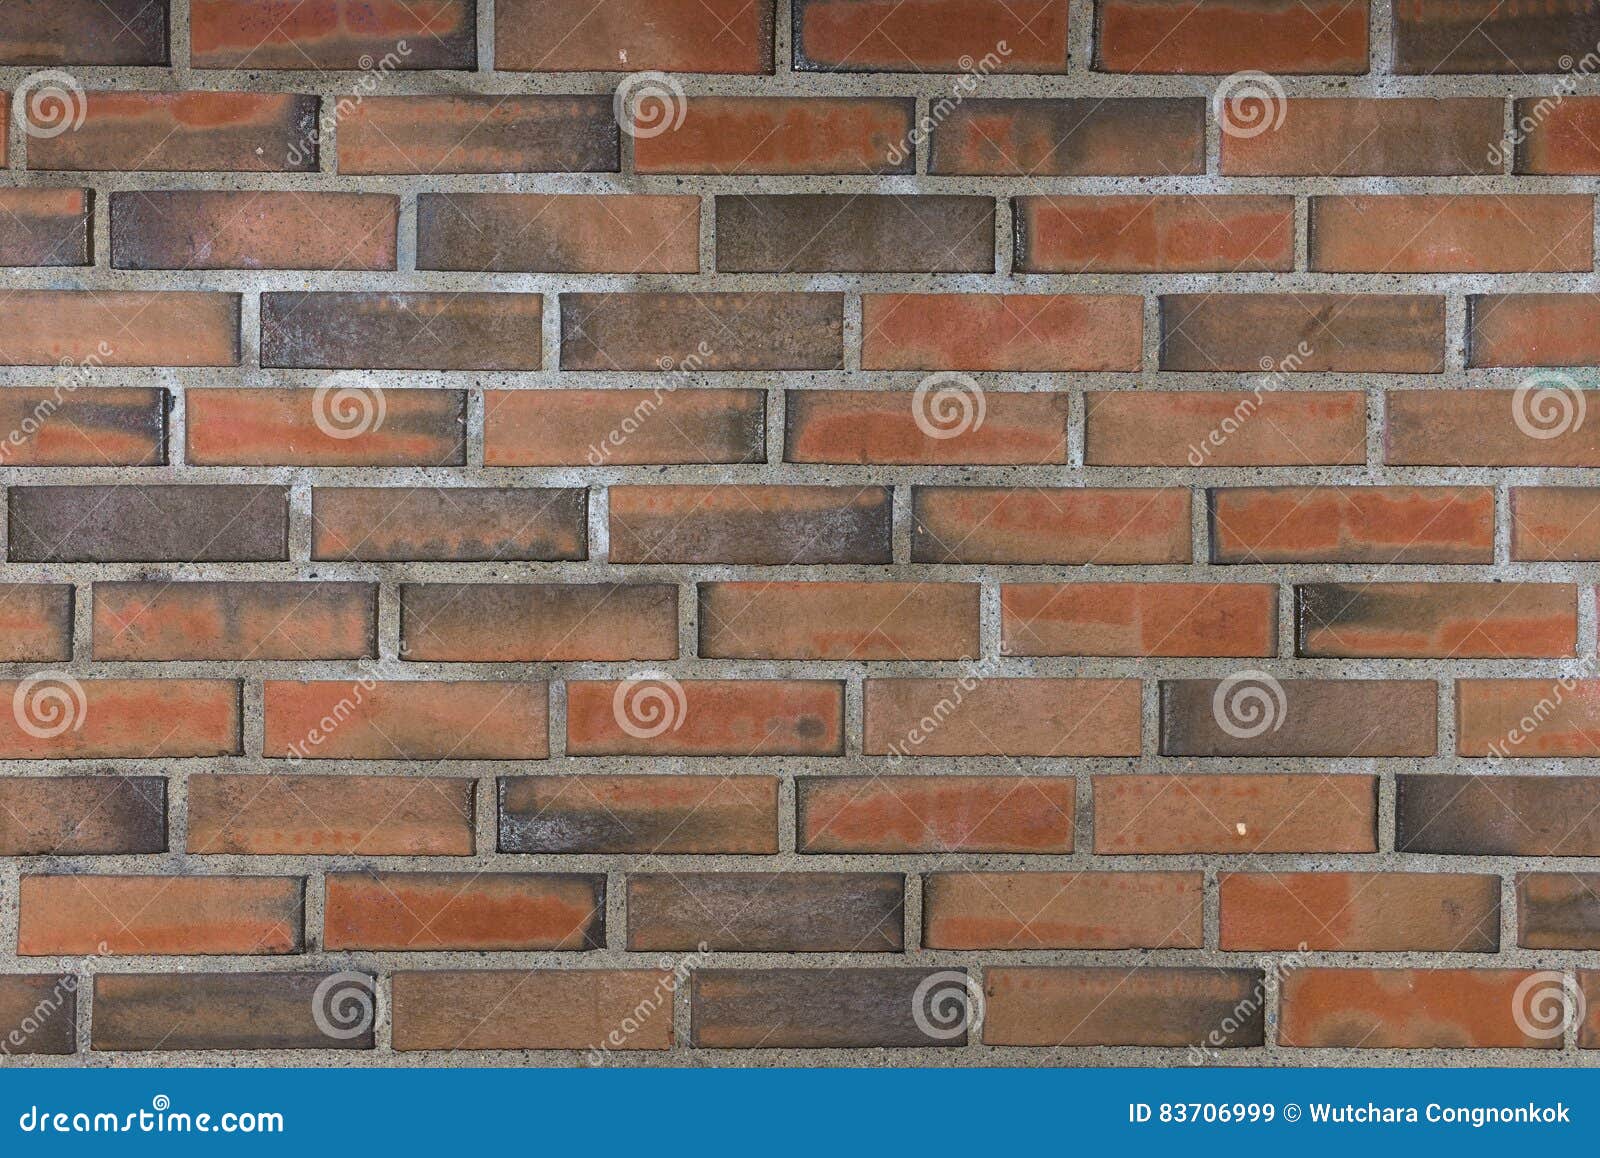 Brick wall texture background, texture background